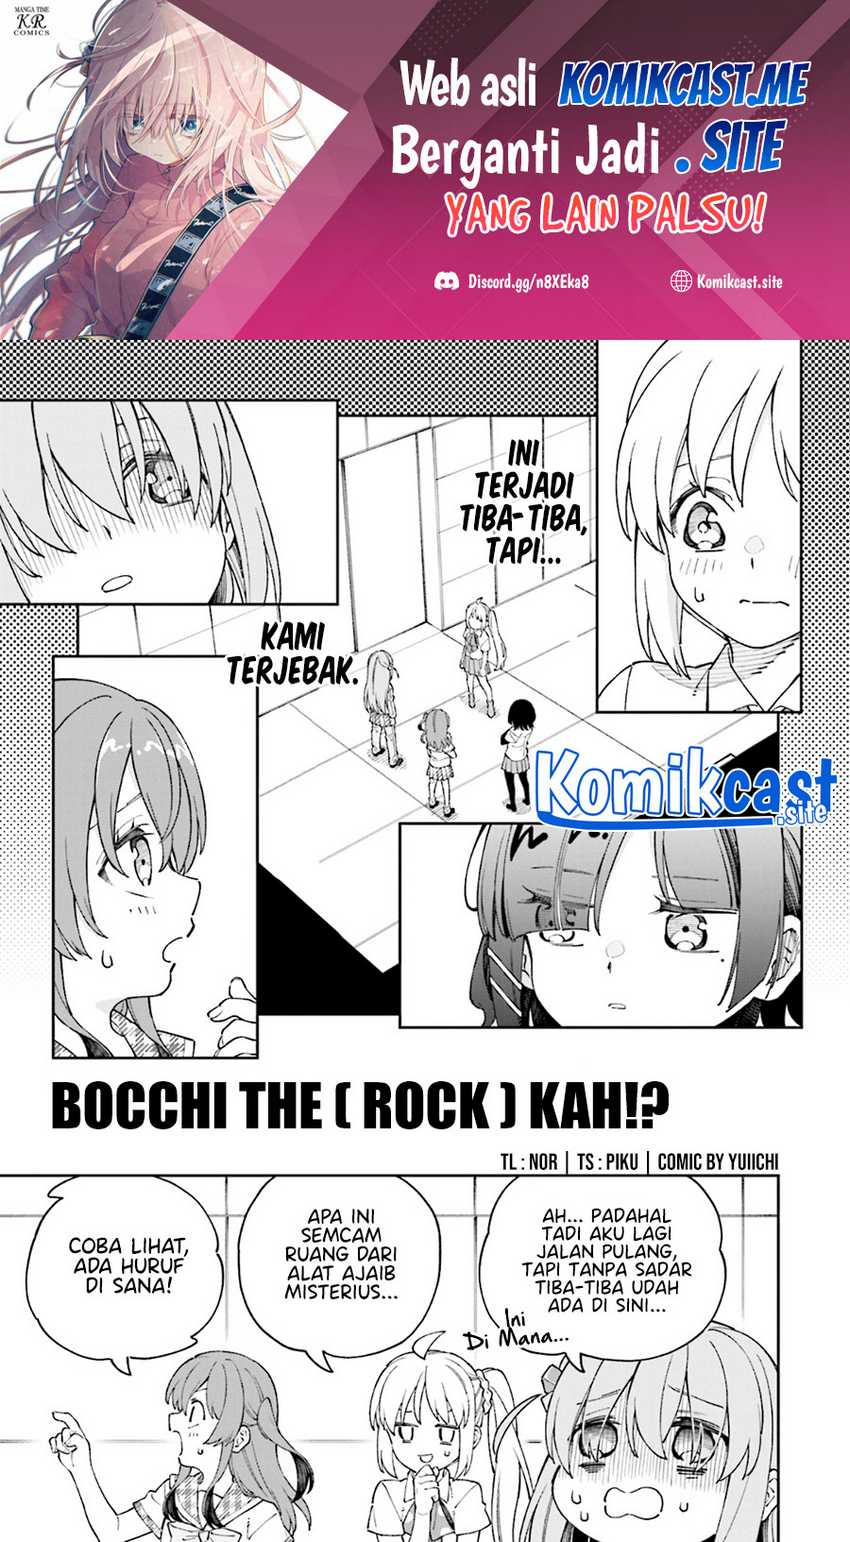 Bocchi The Rock! Anthology Comic Chapter 01